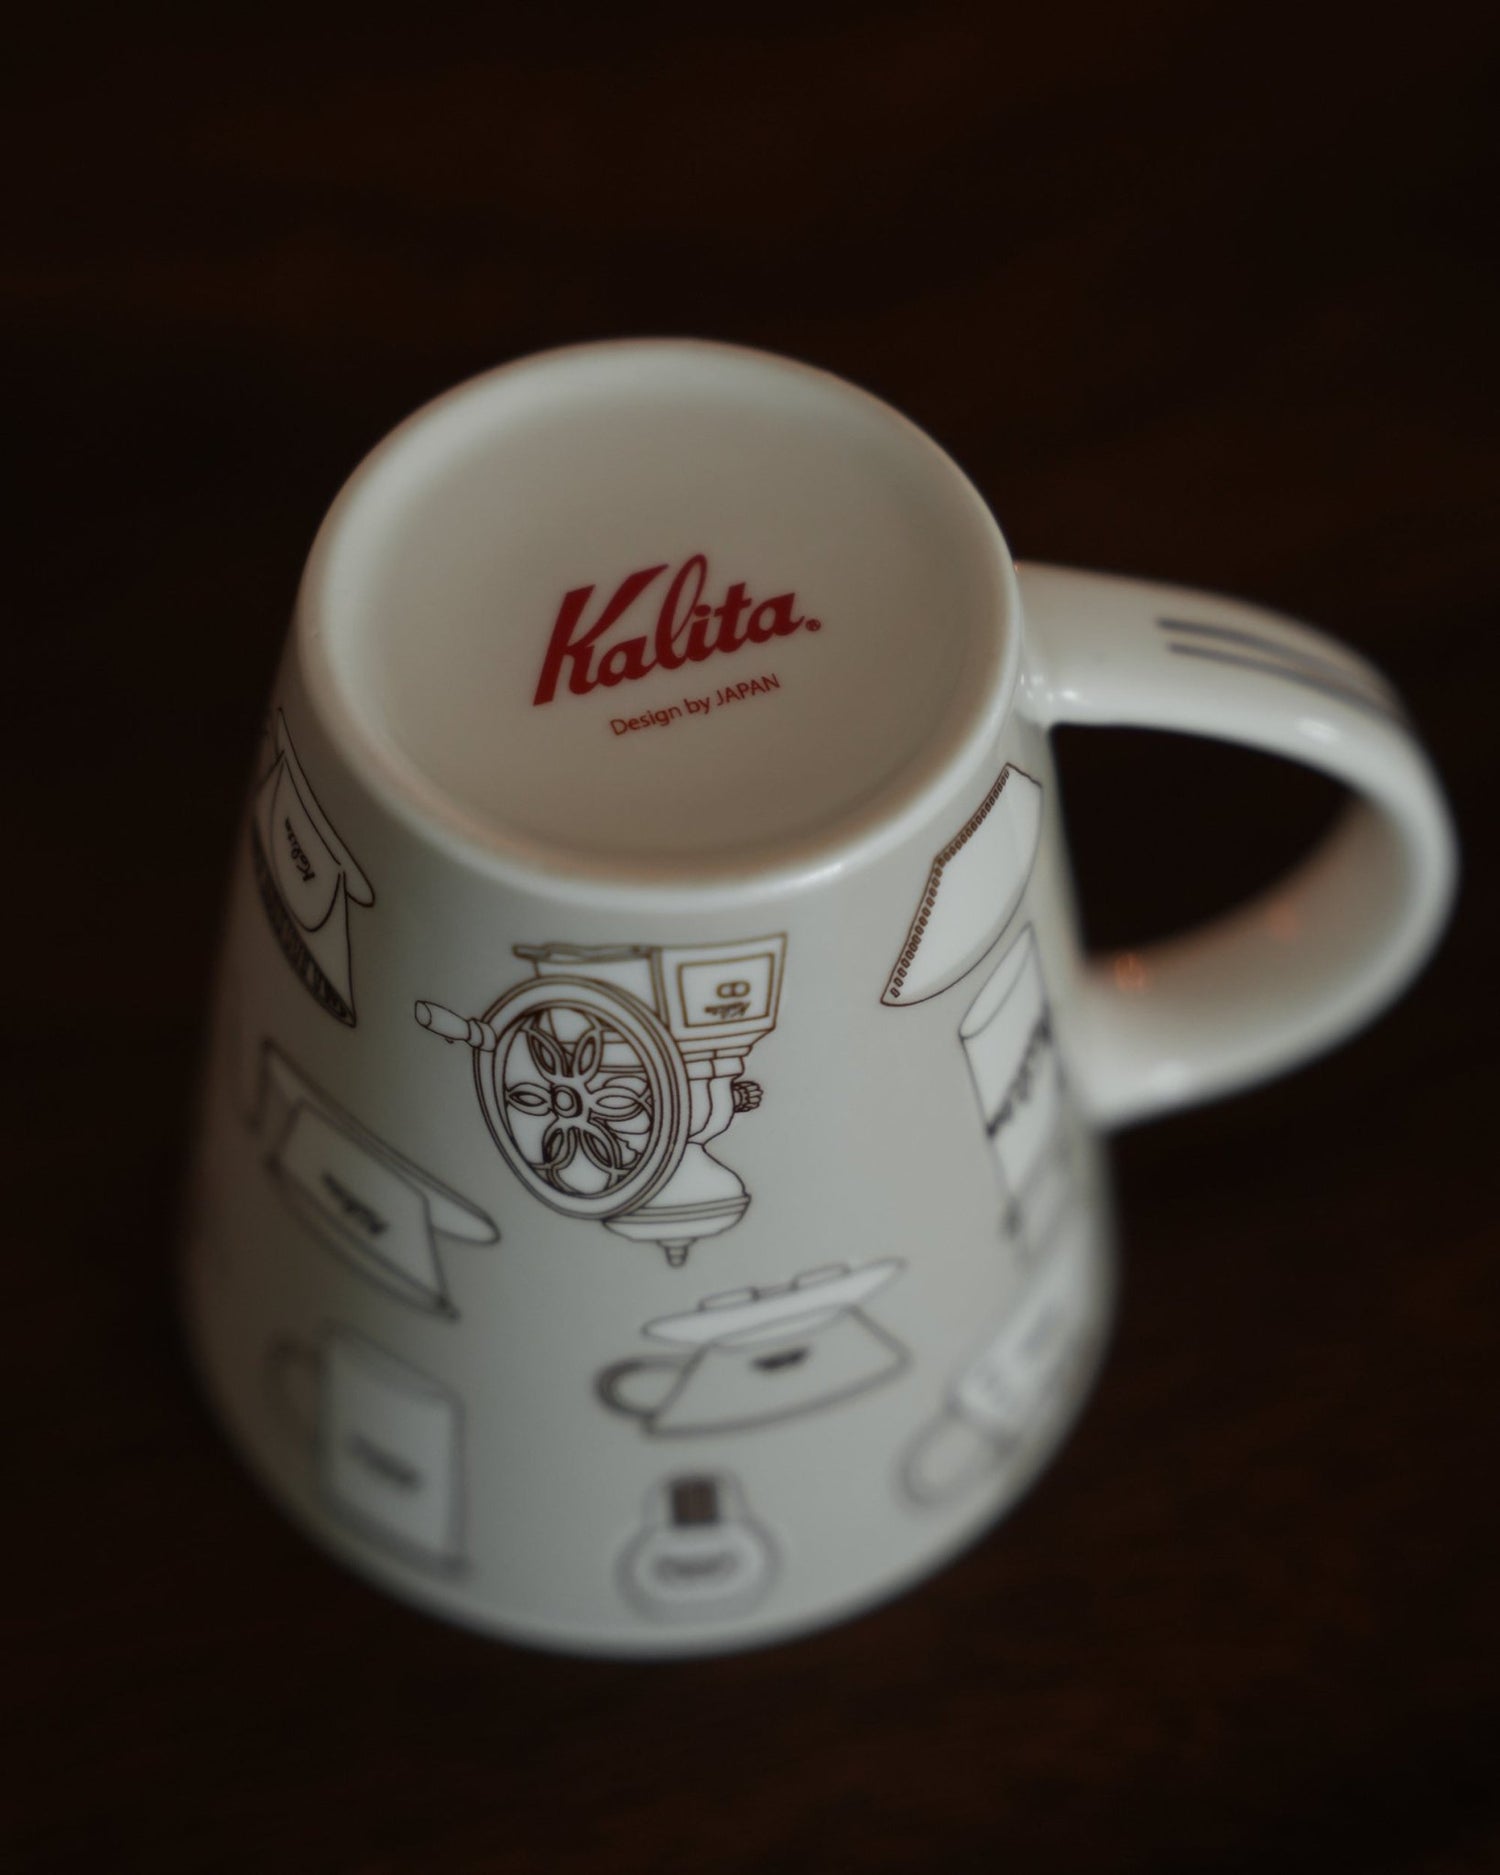 Kalita 陶瓷馬克杯 300ml - 暖灰色 - Coffee Stage 咖啡舞台